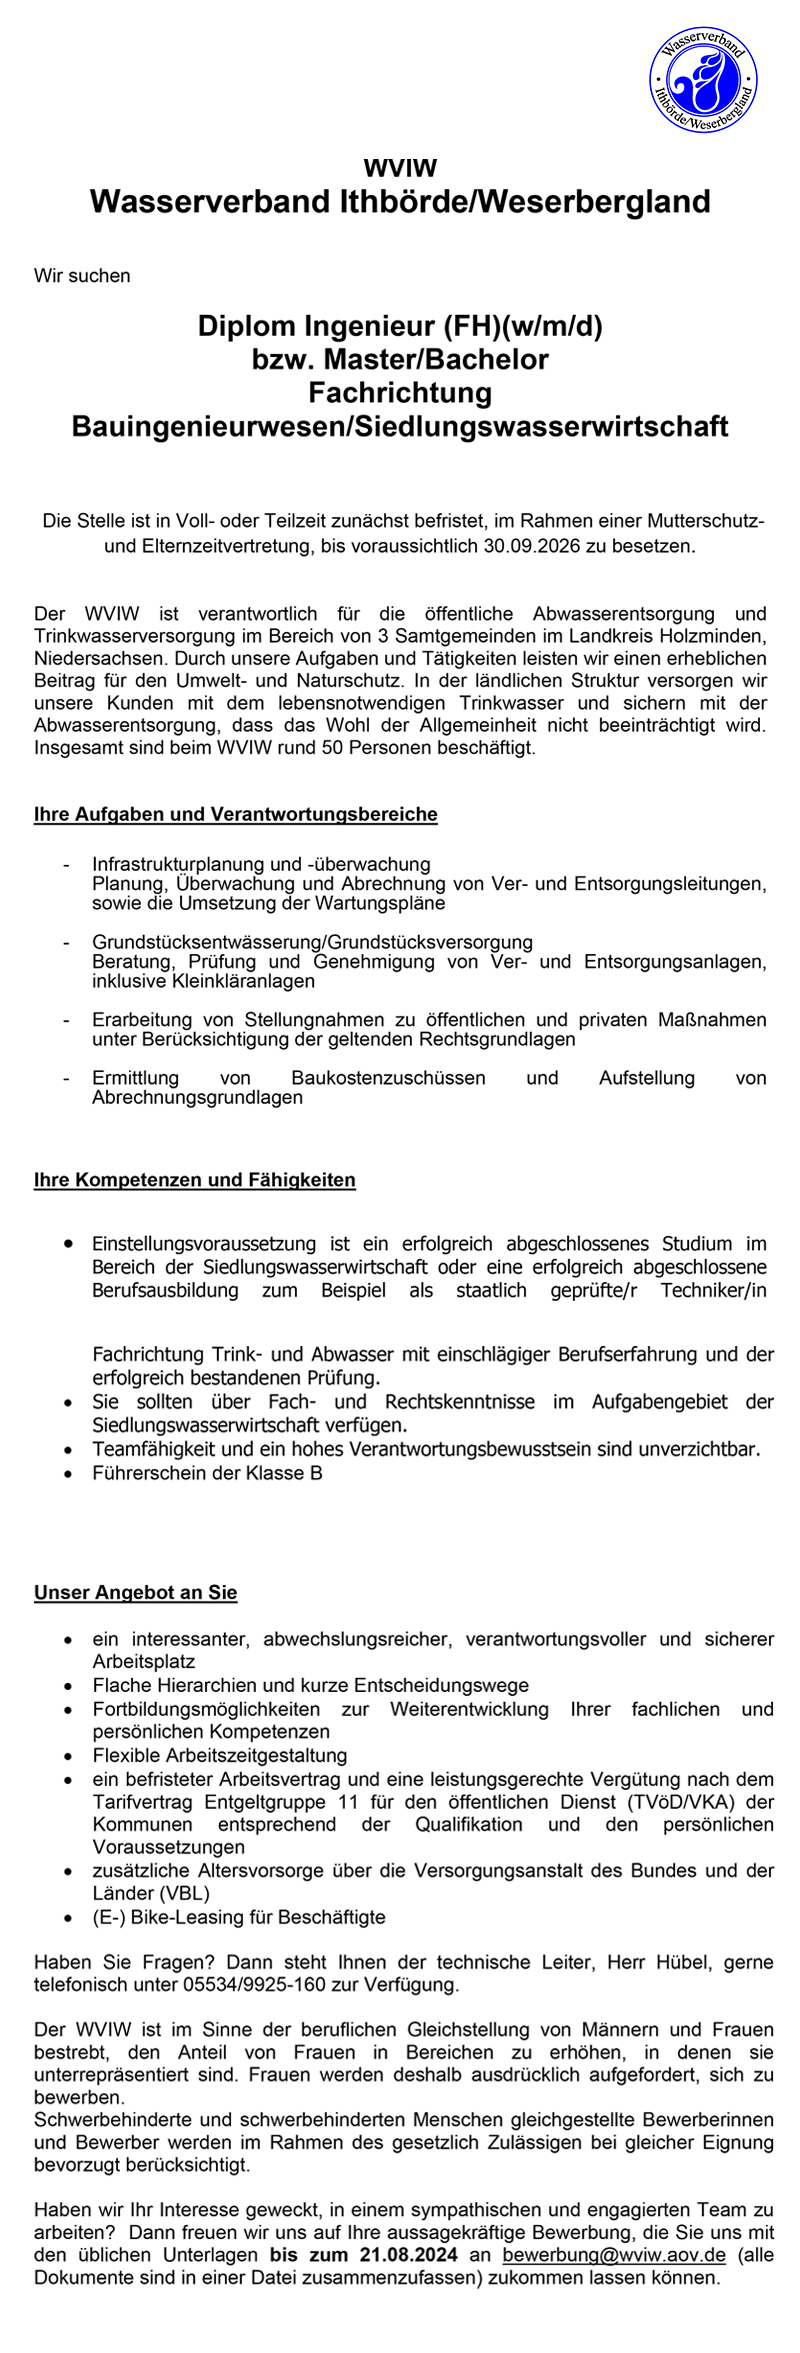 Diplom Ingenieur bzw. Master/Bachelor (m/w/d) - WVIW Wasserverband Ithbörde/Weserbergland